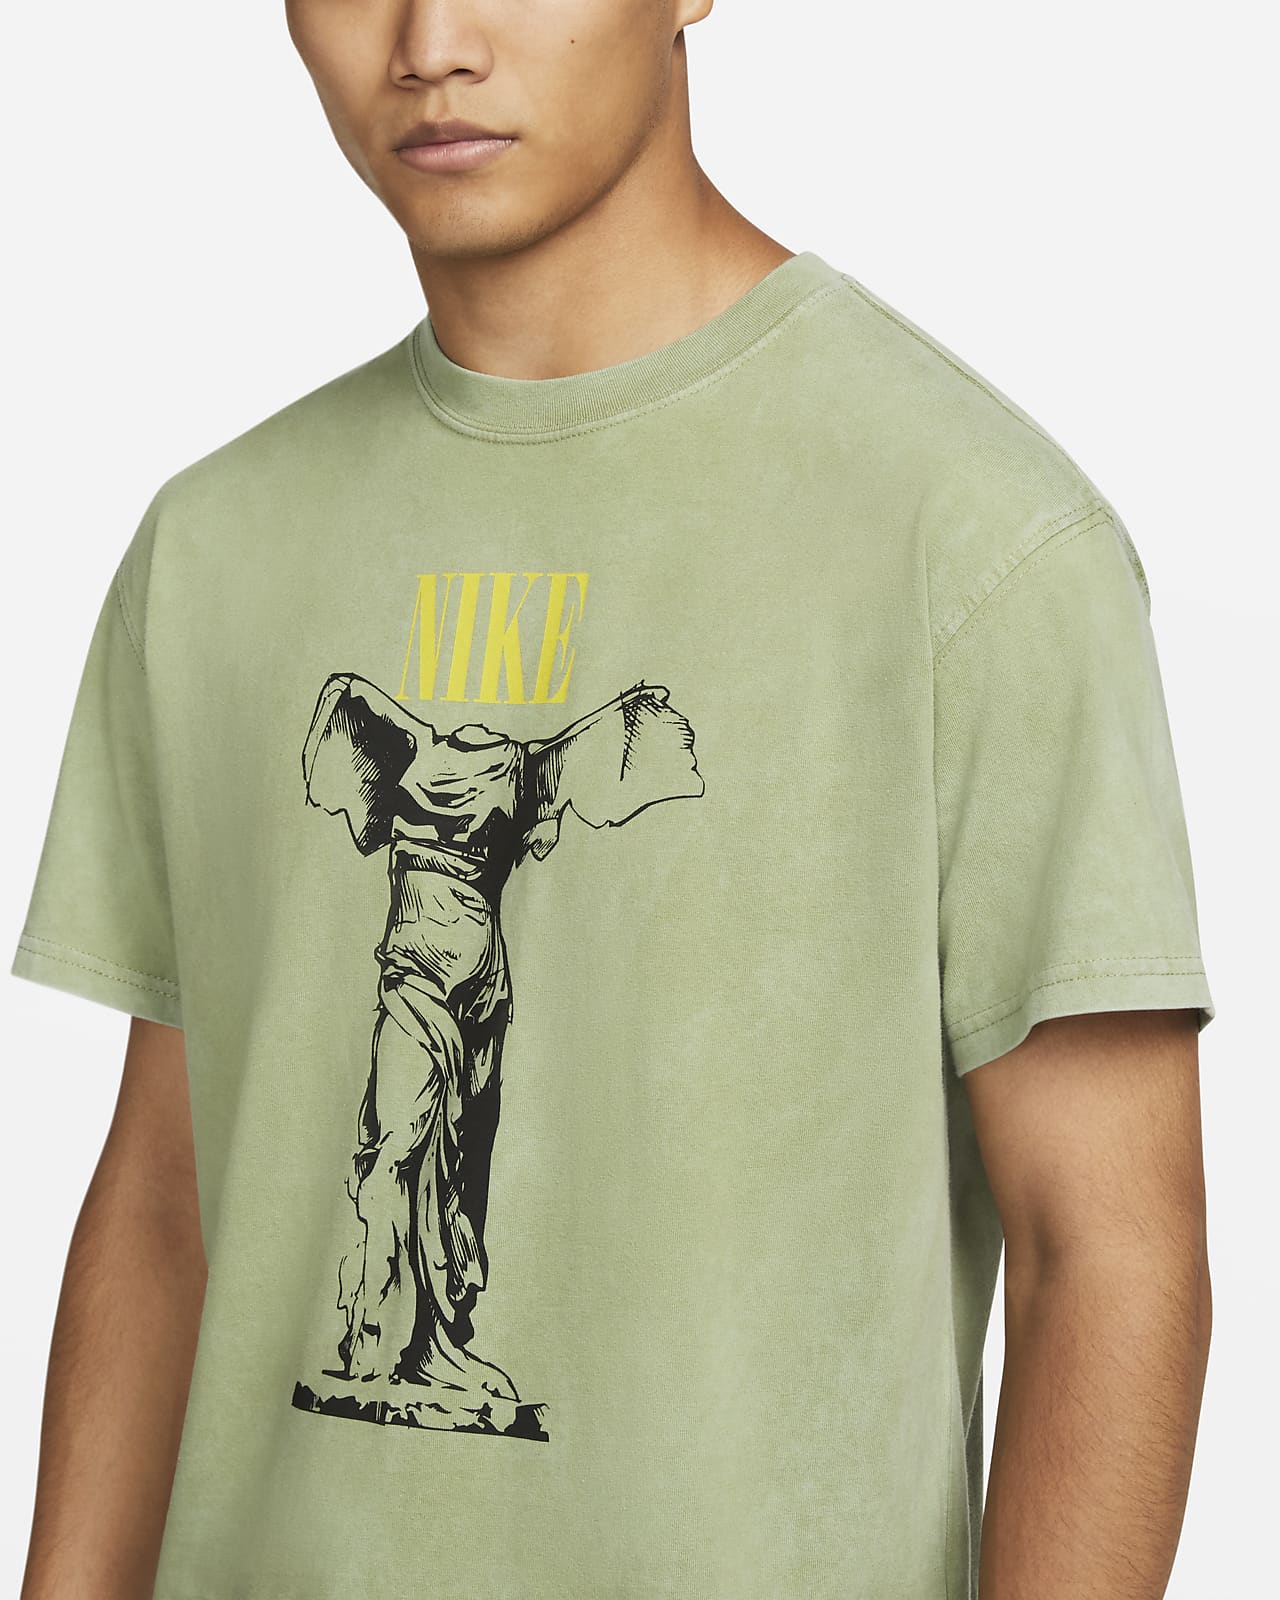 Basketball Tops & T-Shirts. Nike PH